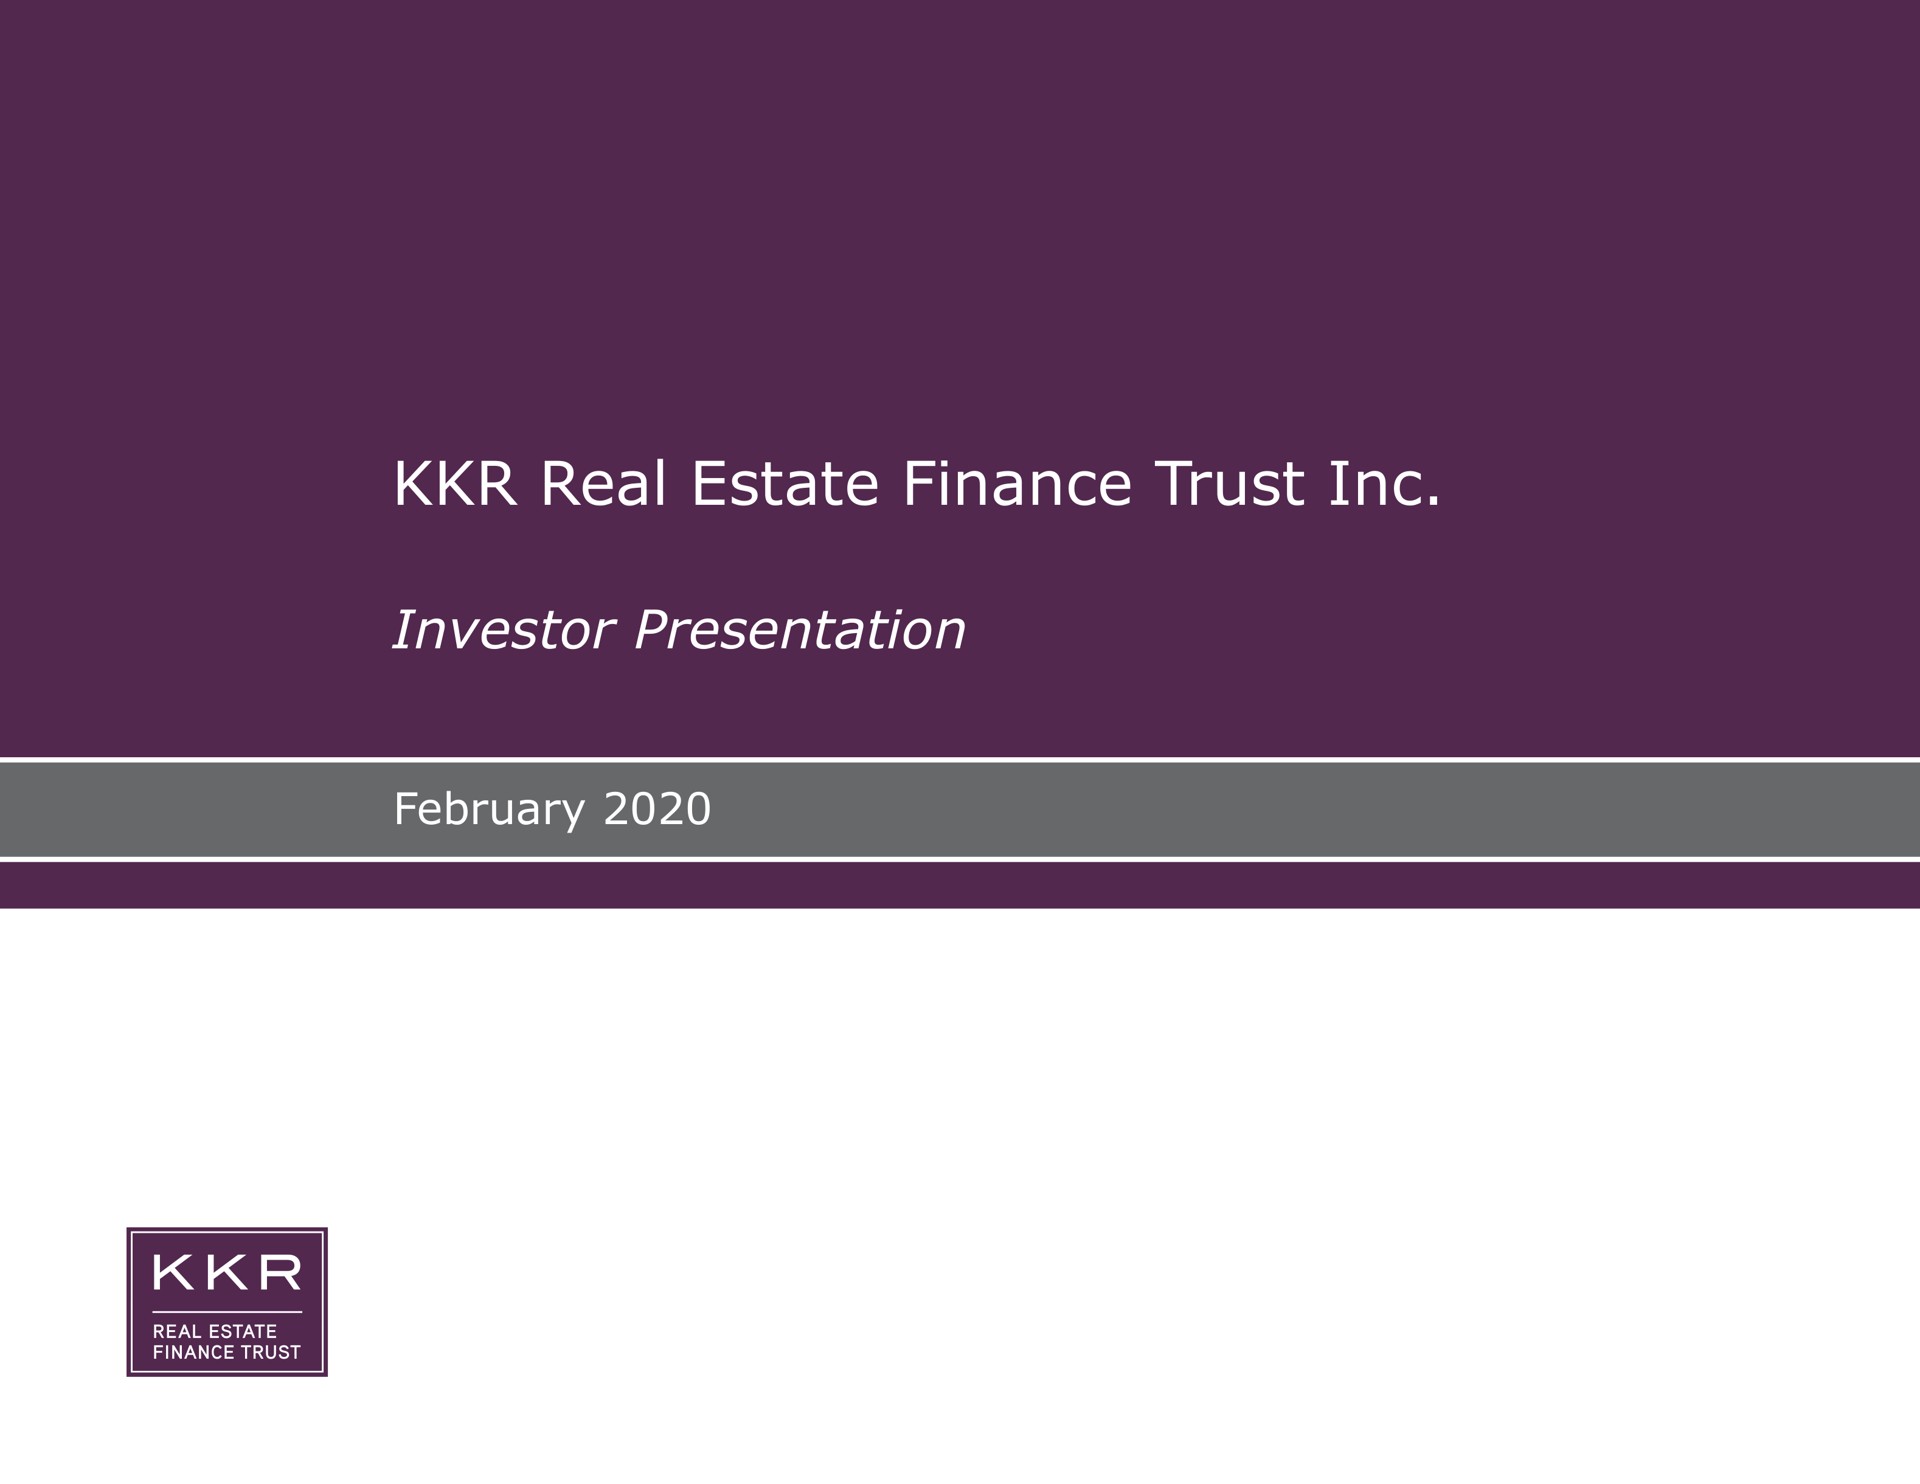 real estate finance trust investor presentation | KKR Real Estate Finance Trust